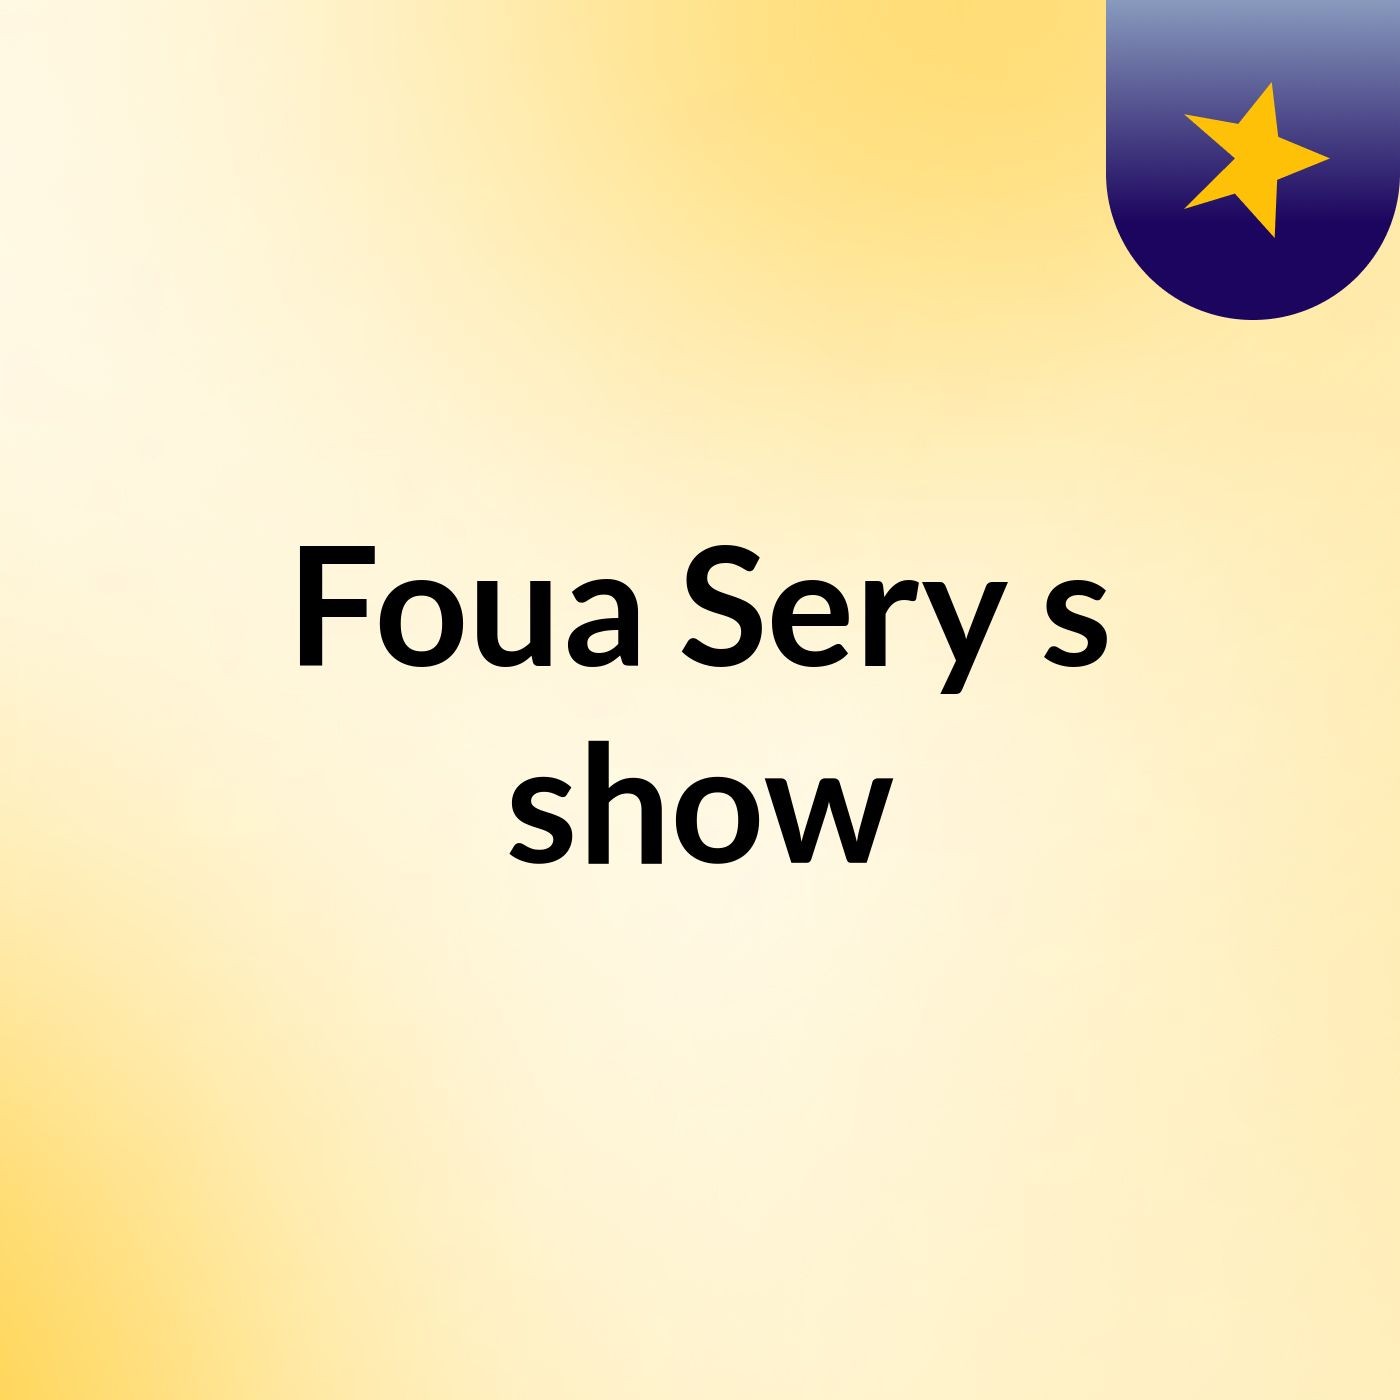 Foua Sery's show